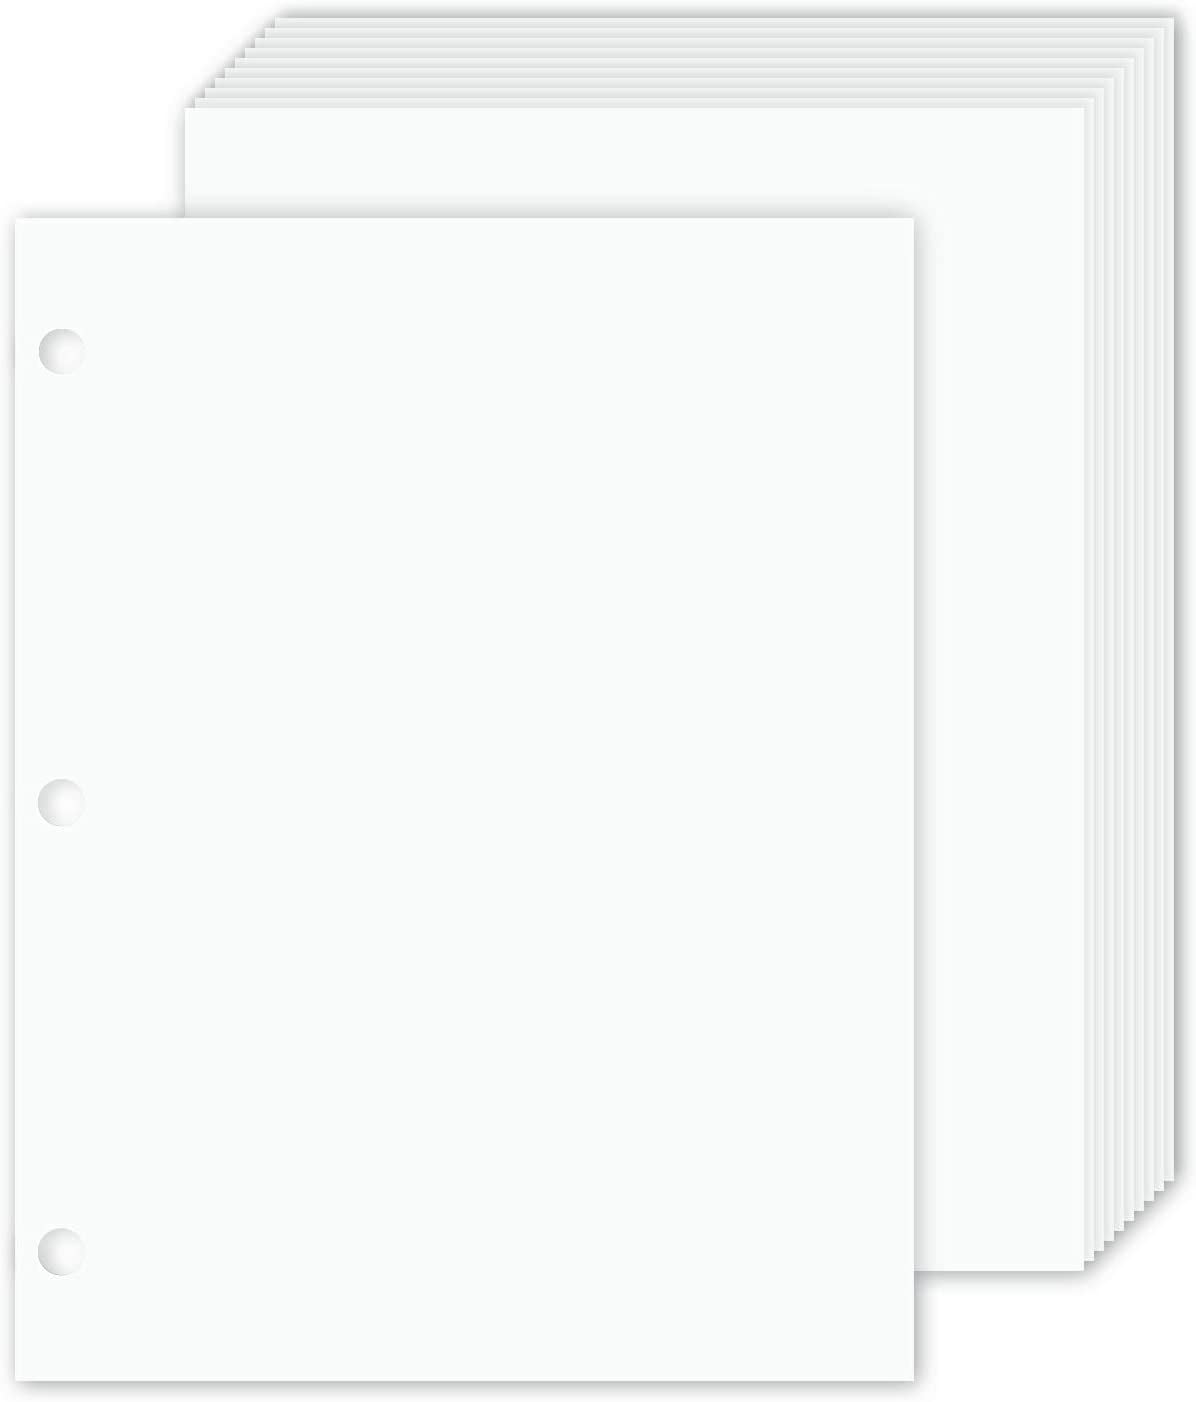 Darice Super Assortment Textured Cardstock Value Pack, 8.5 x 11, 160 Sheets  